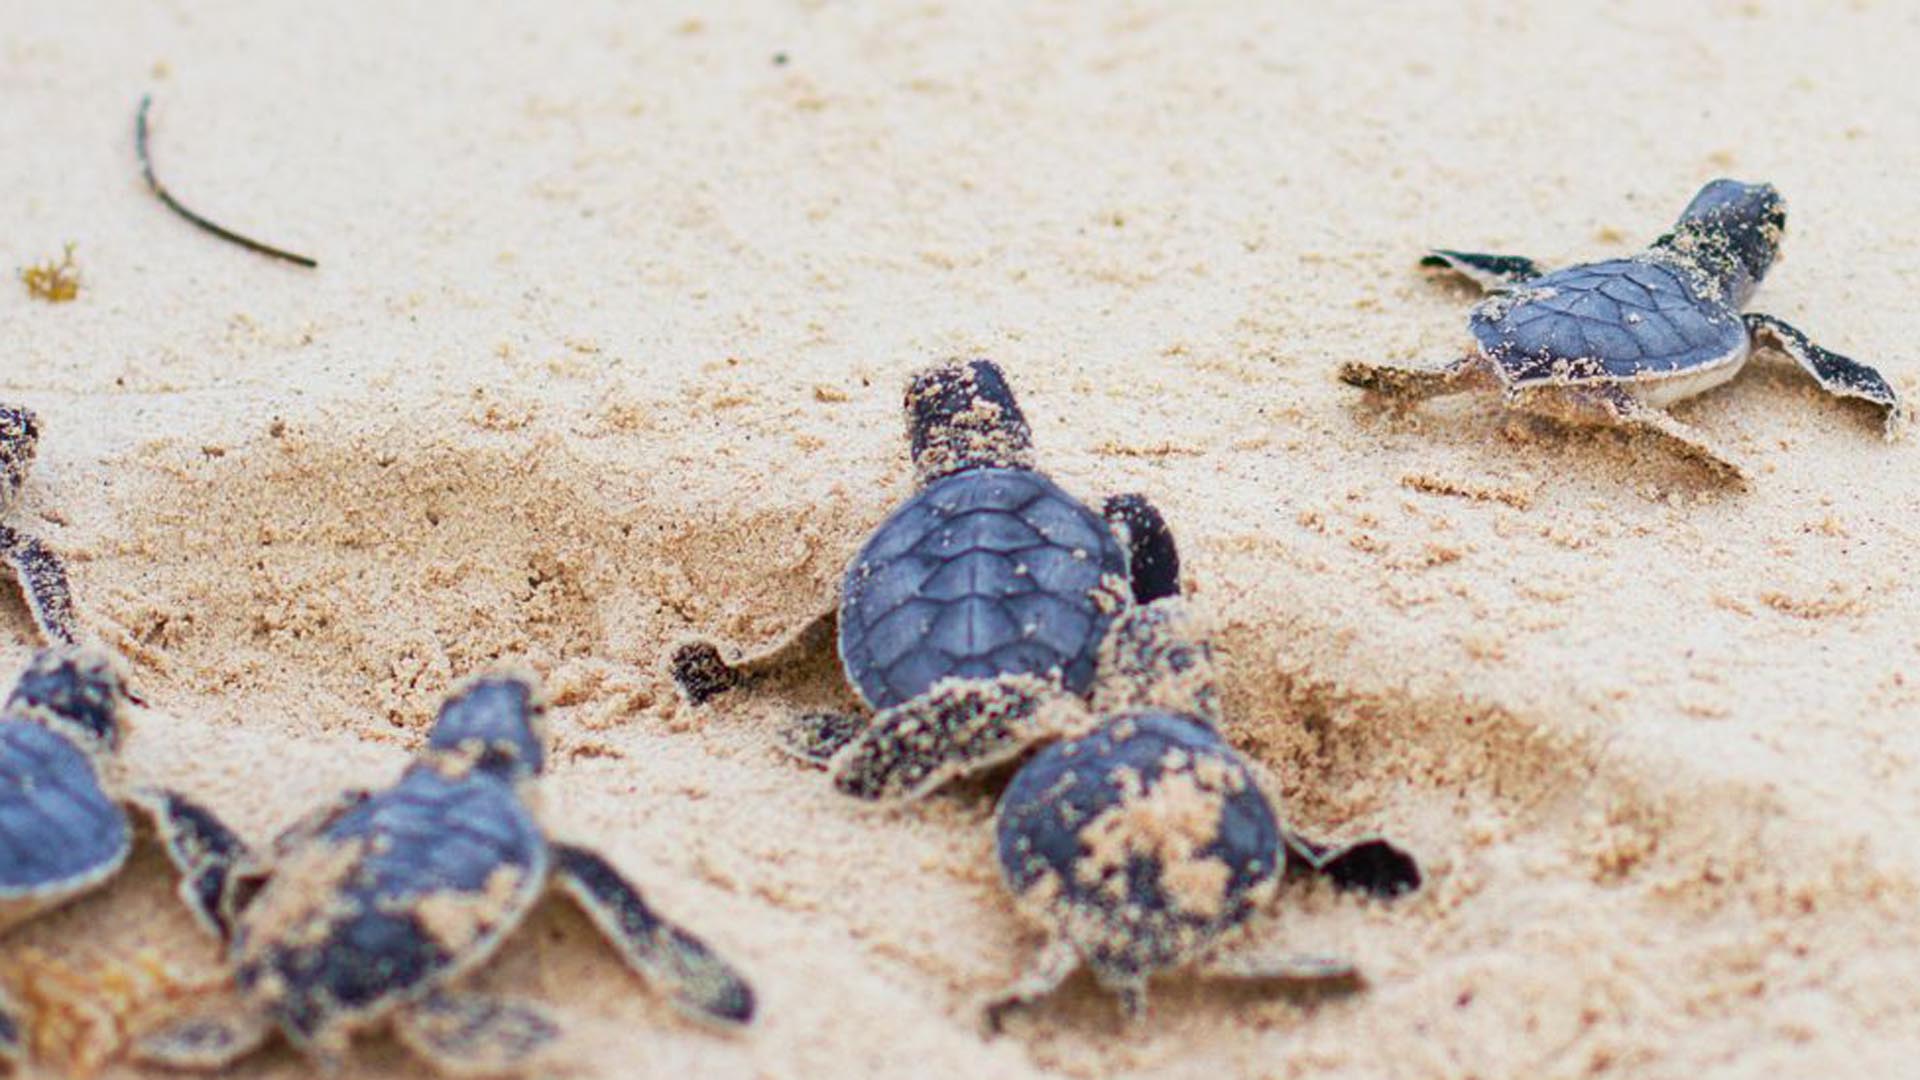 tortugas marinas playa parguito - Noticias Ahora